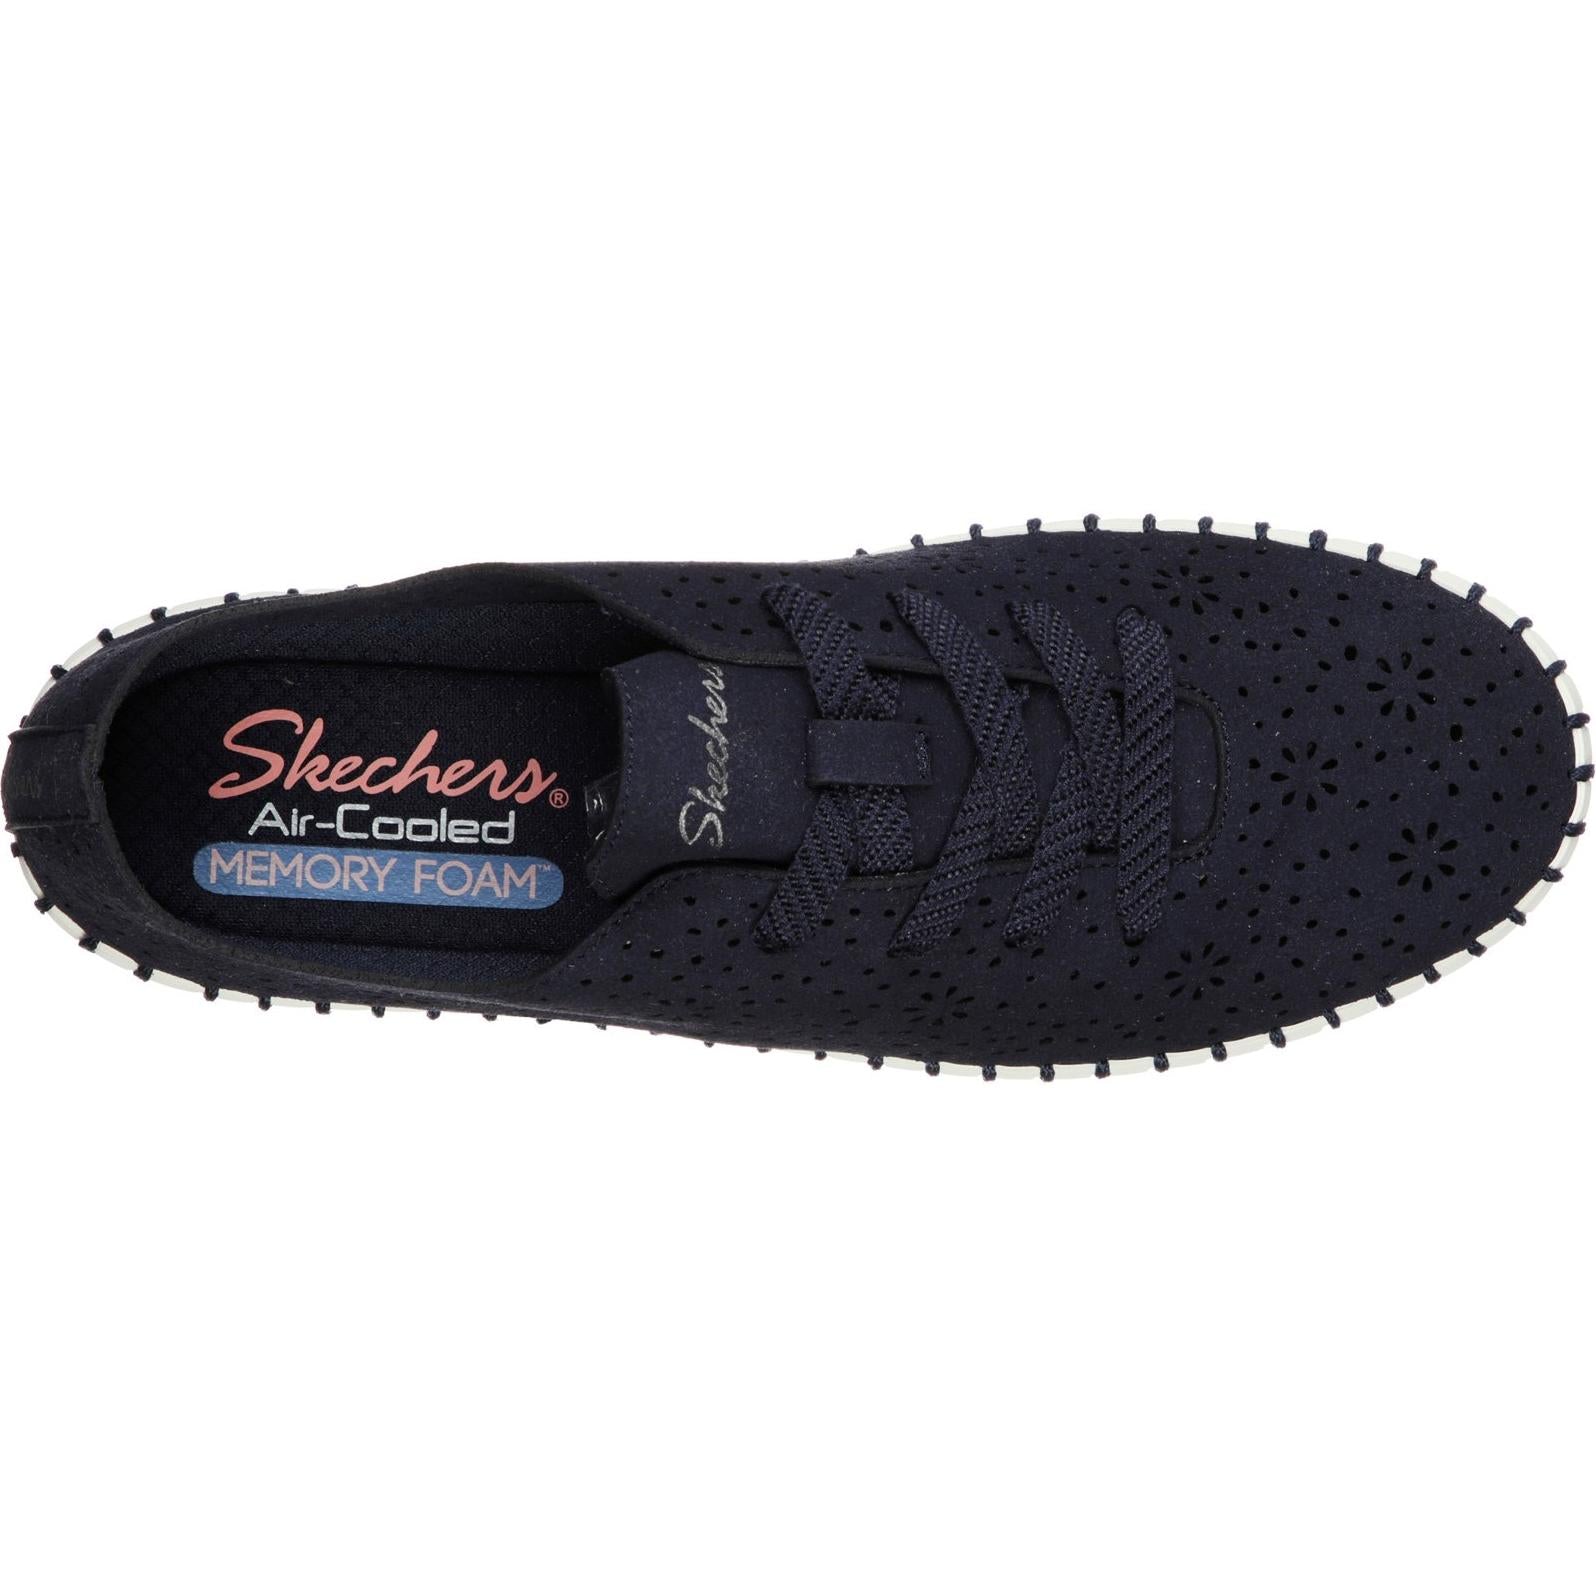 Skechers Sepulveda Blvd Floral Maze Lace Shoes